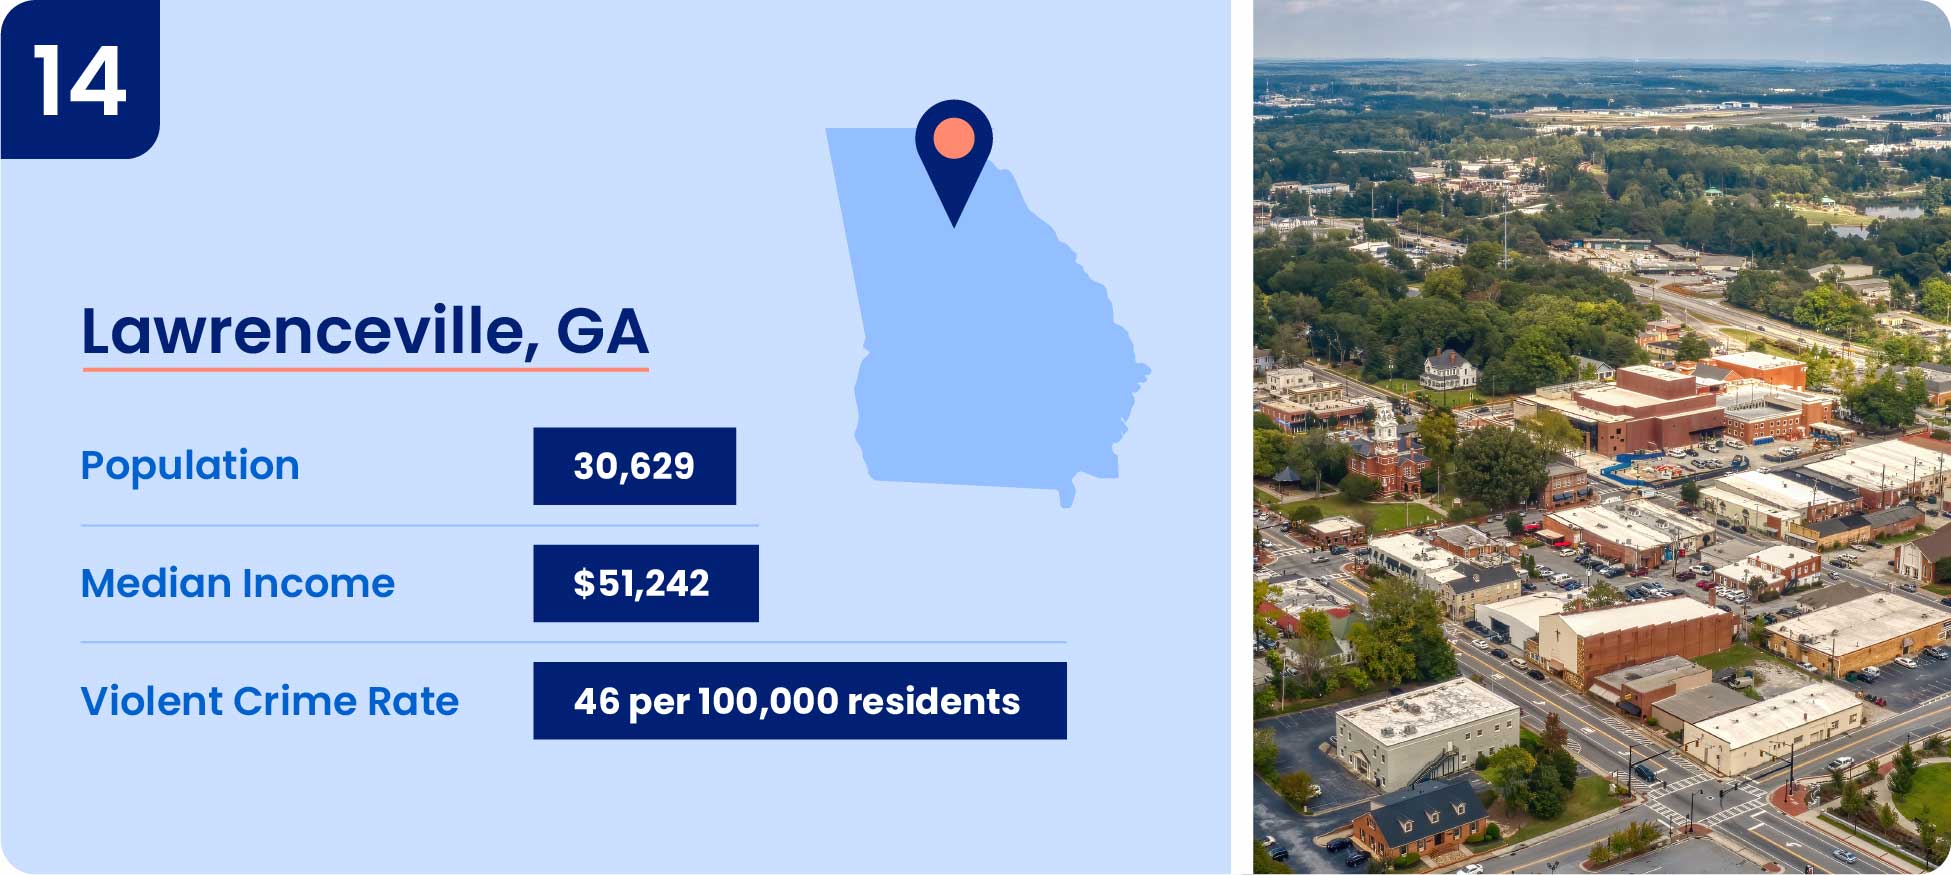 Image shows safety data including population, median income, and violent crime rate for Lawrenceville, Georgia.